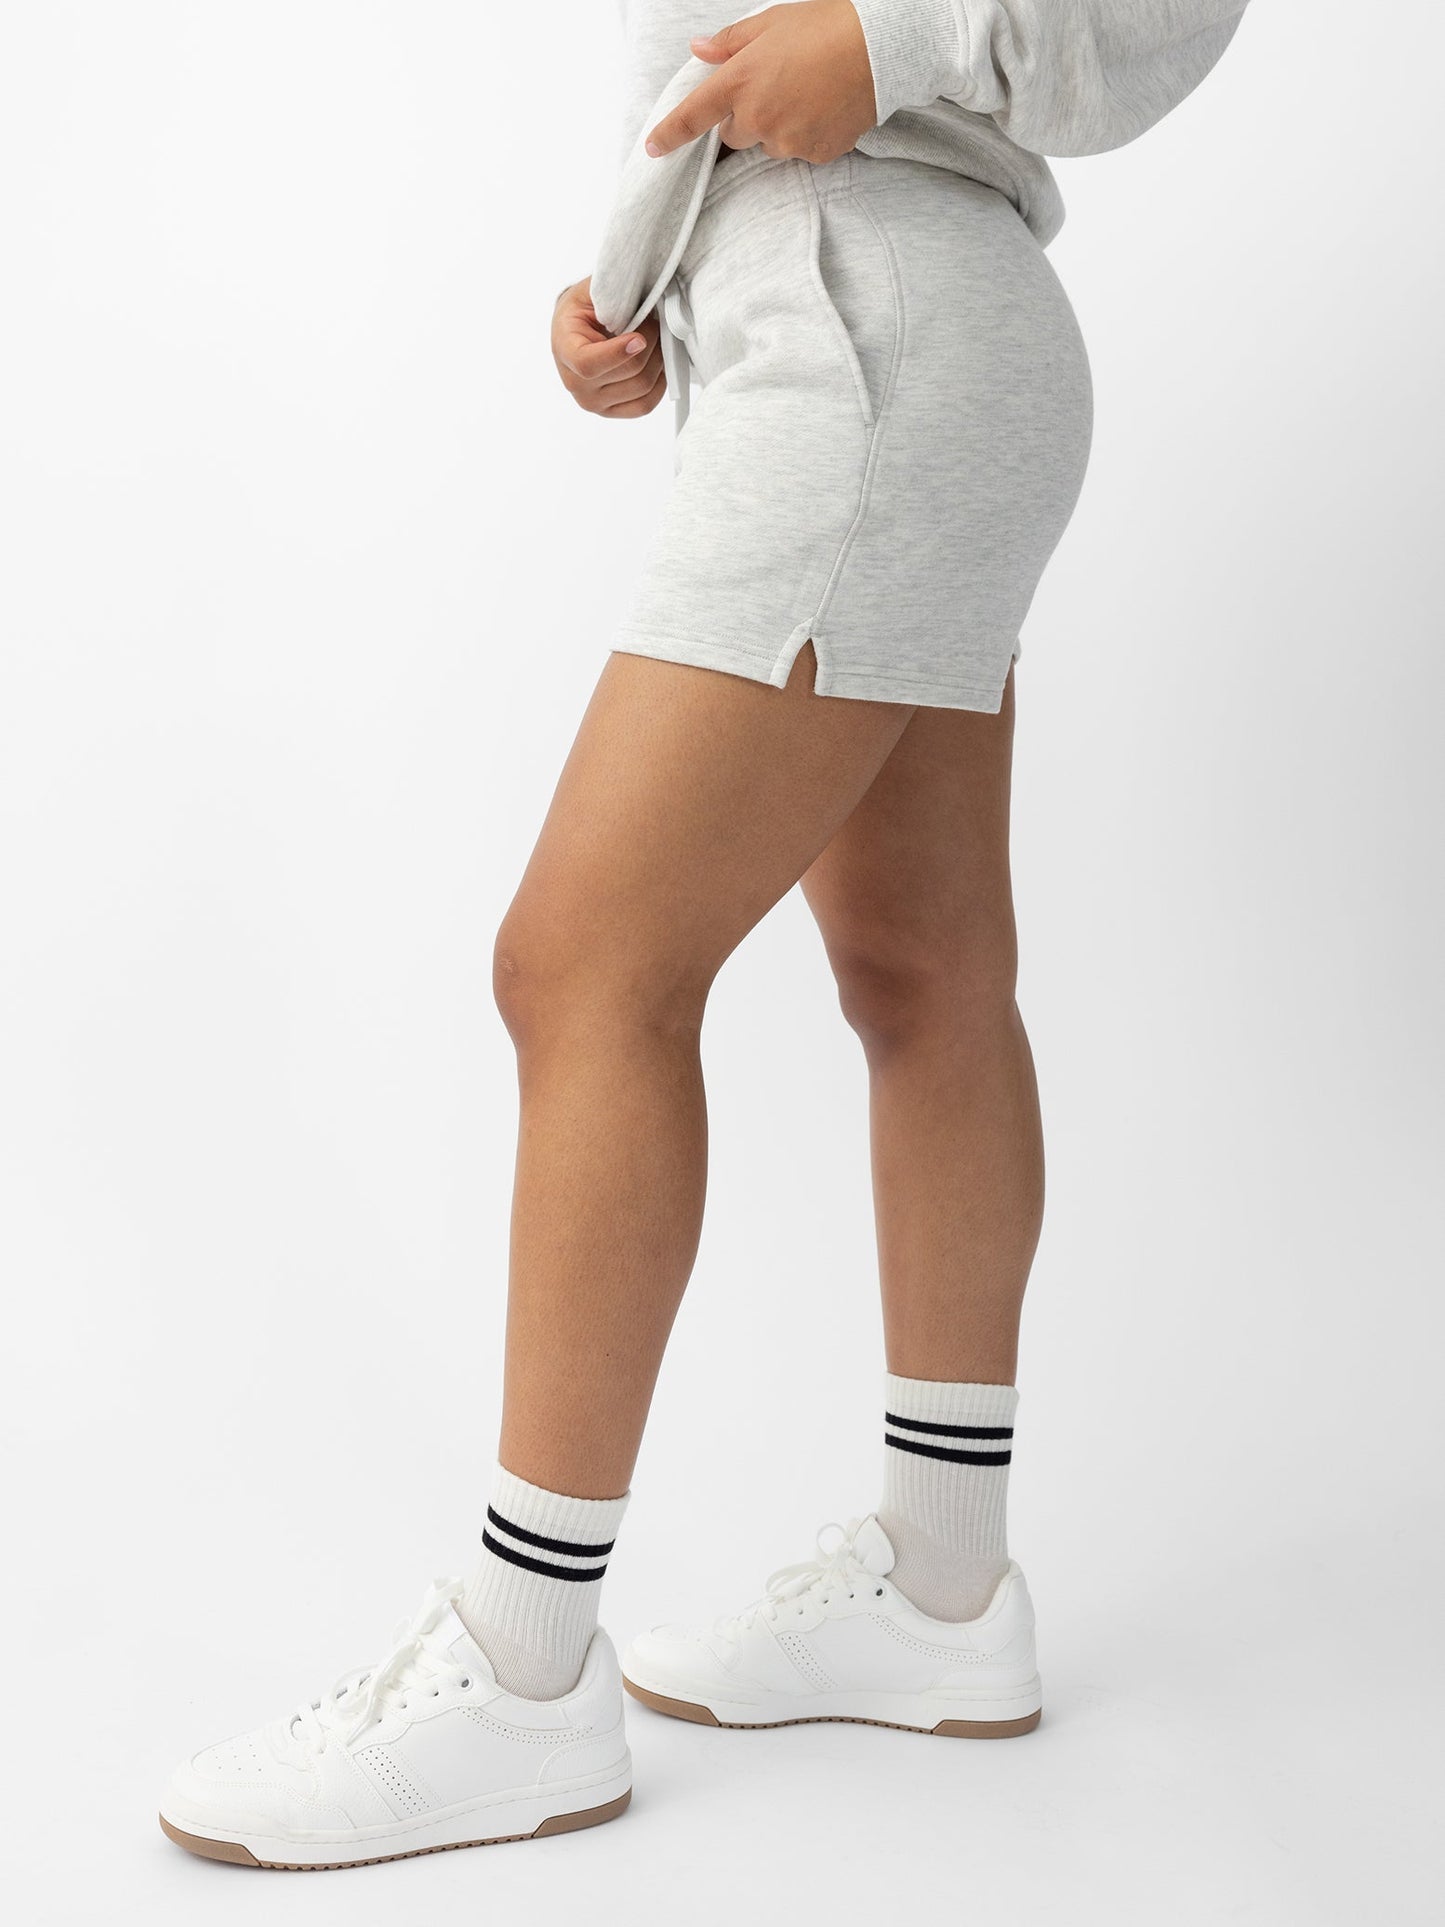 Women's CityScape Shorts